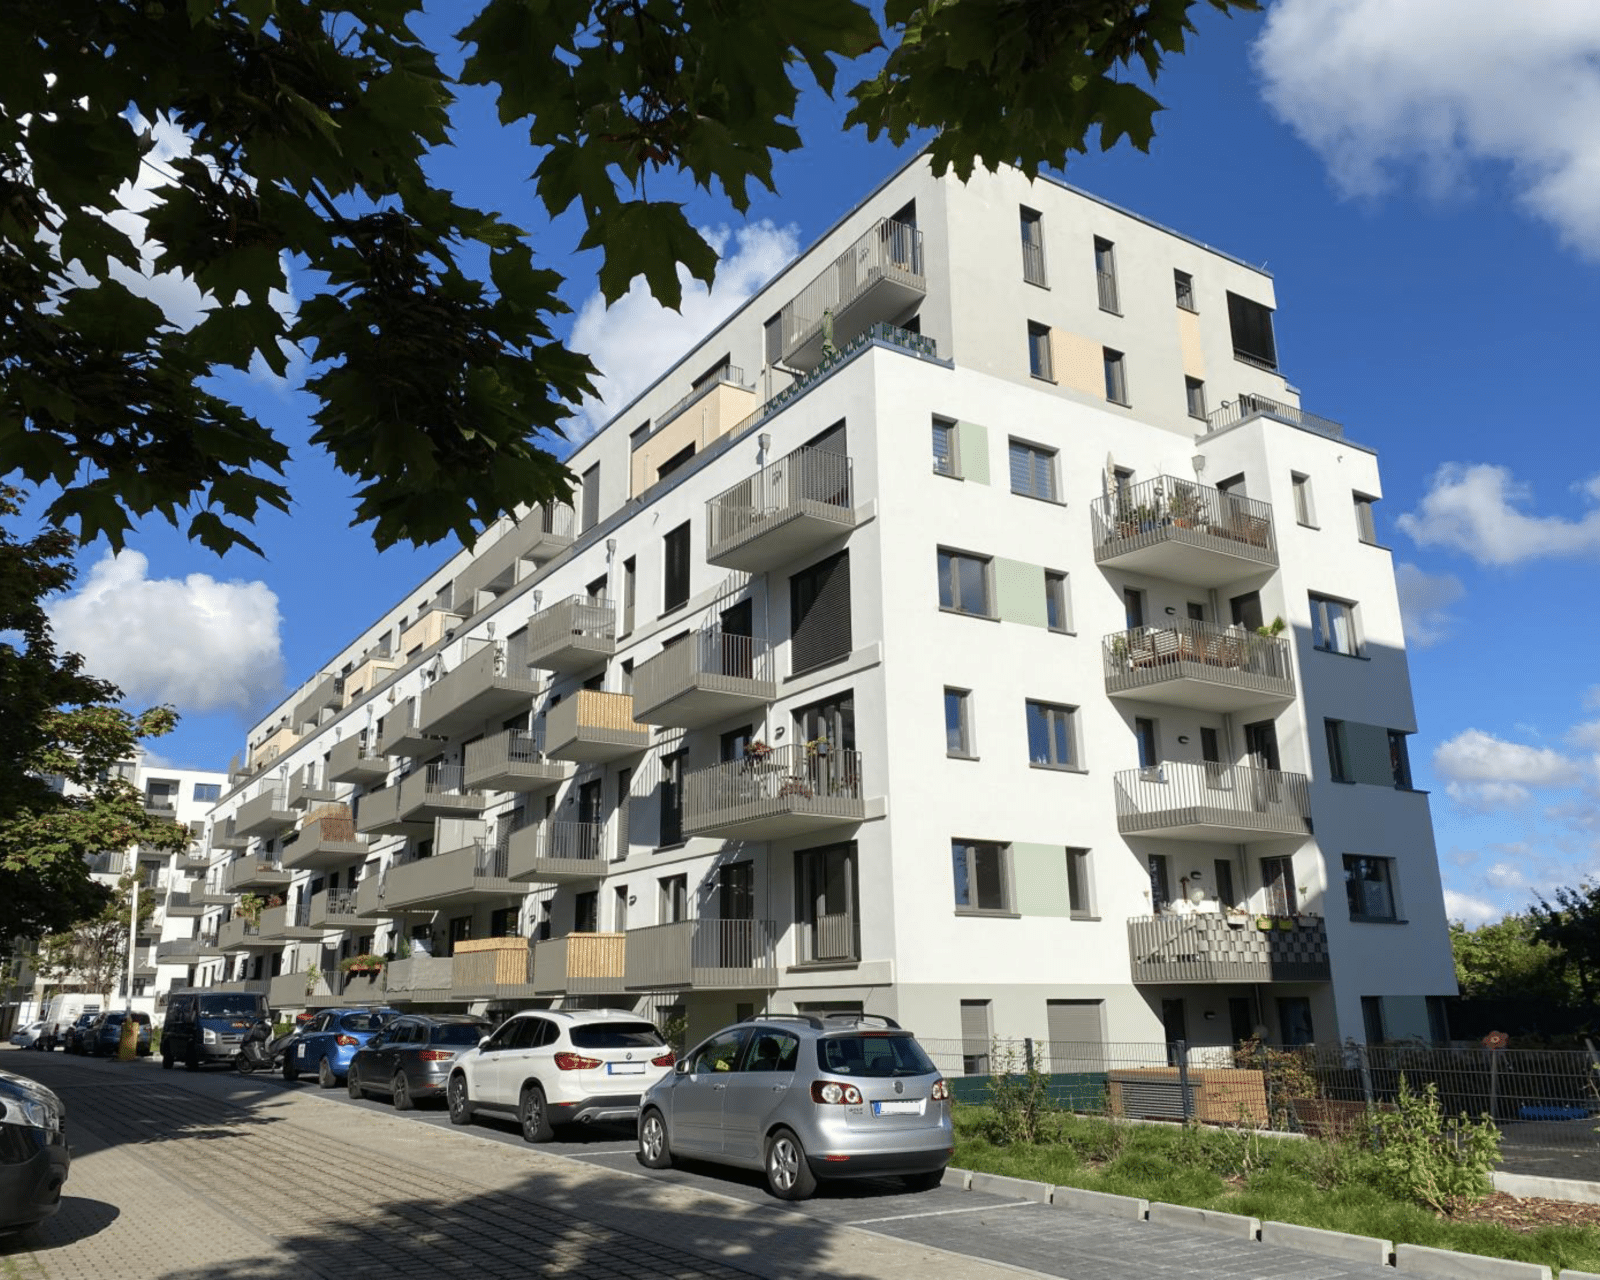 Covivio verkauft vermieteten Wohnungsneubau in Berlin an MPC Capital